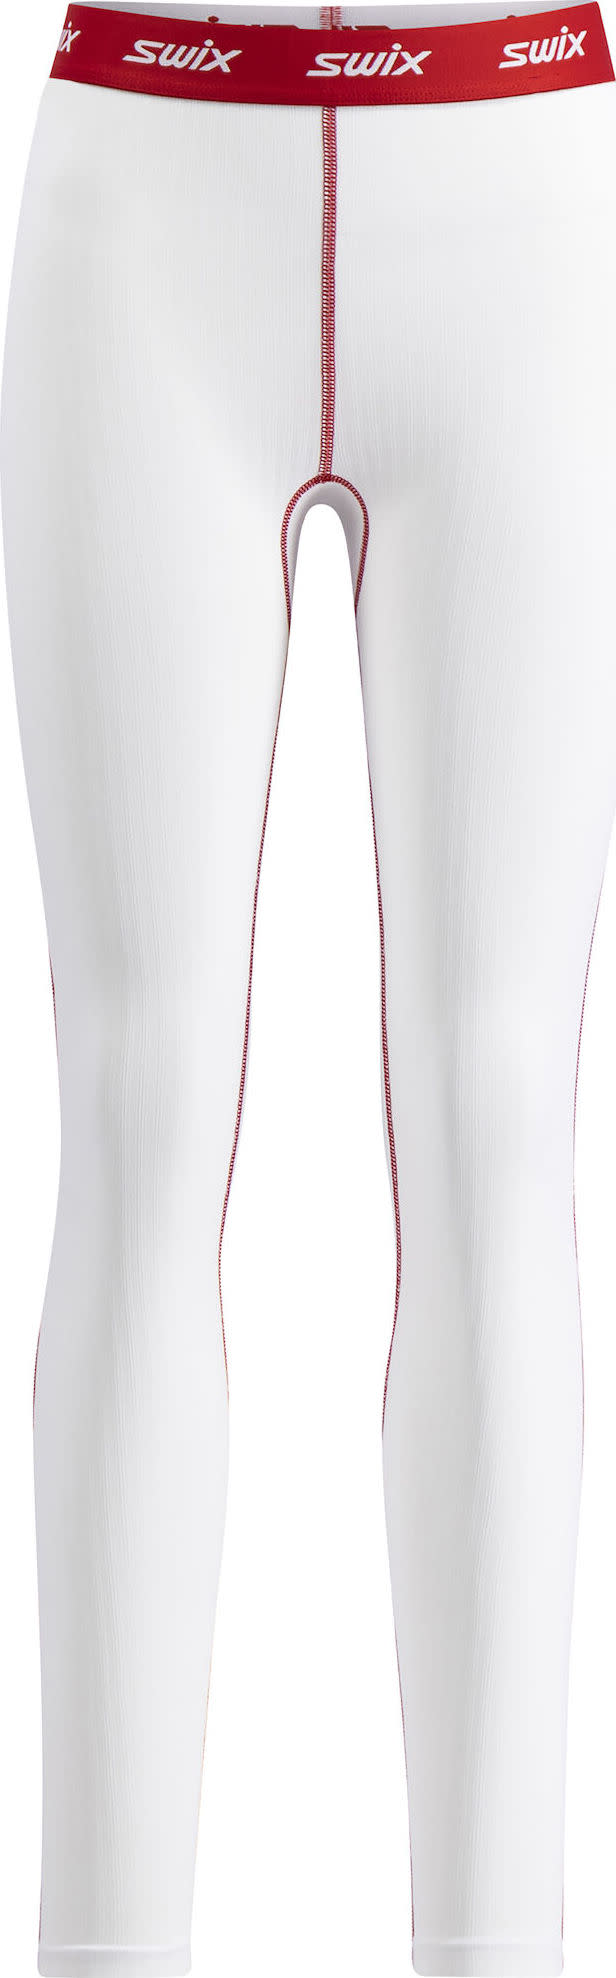 Women’s RaceX Classic Pants Bright White/Swix Red